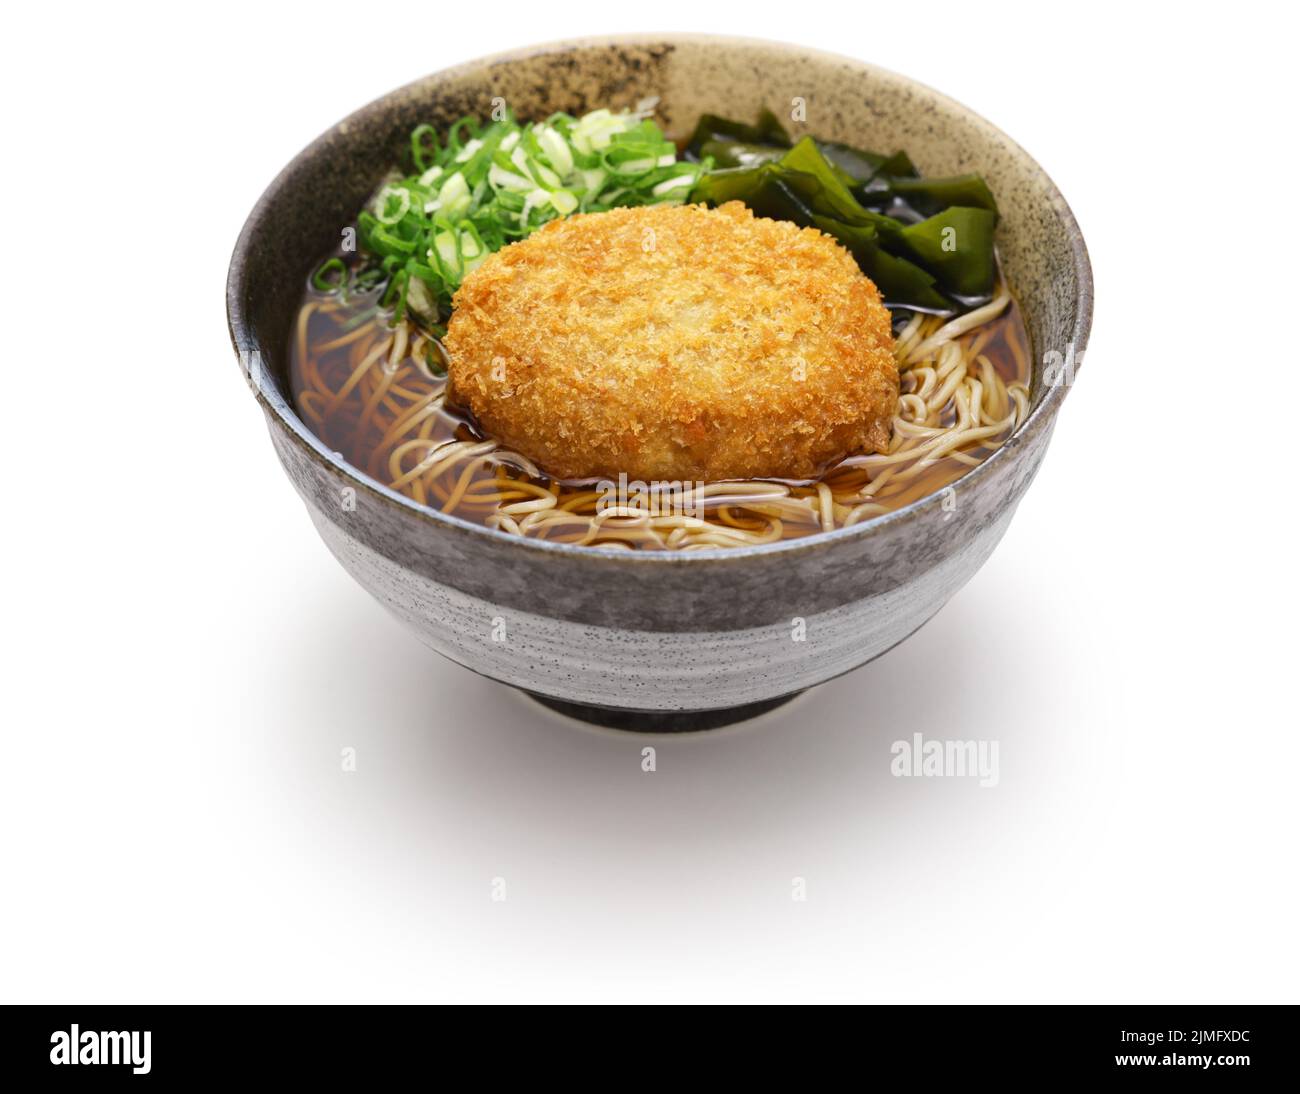 Korokke soba ( buckwheat noodles with croquette ), Japanese food Stock Photo